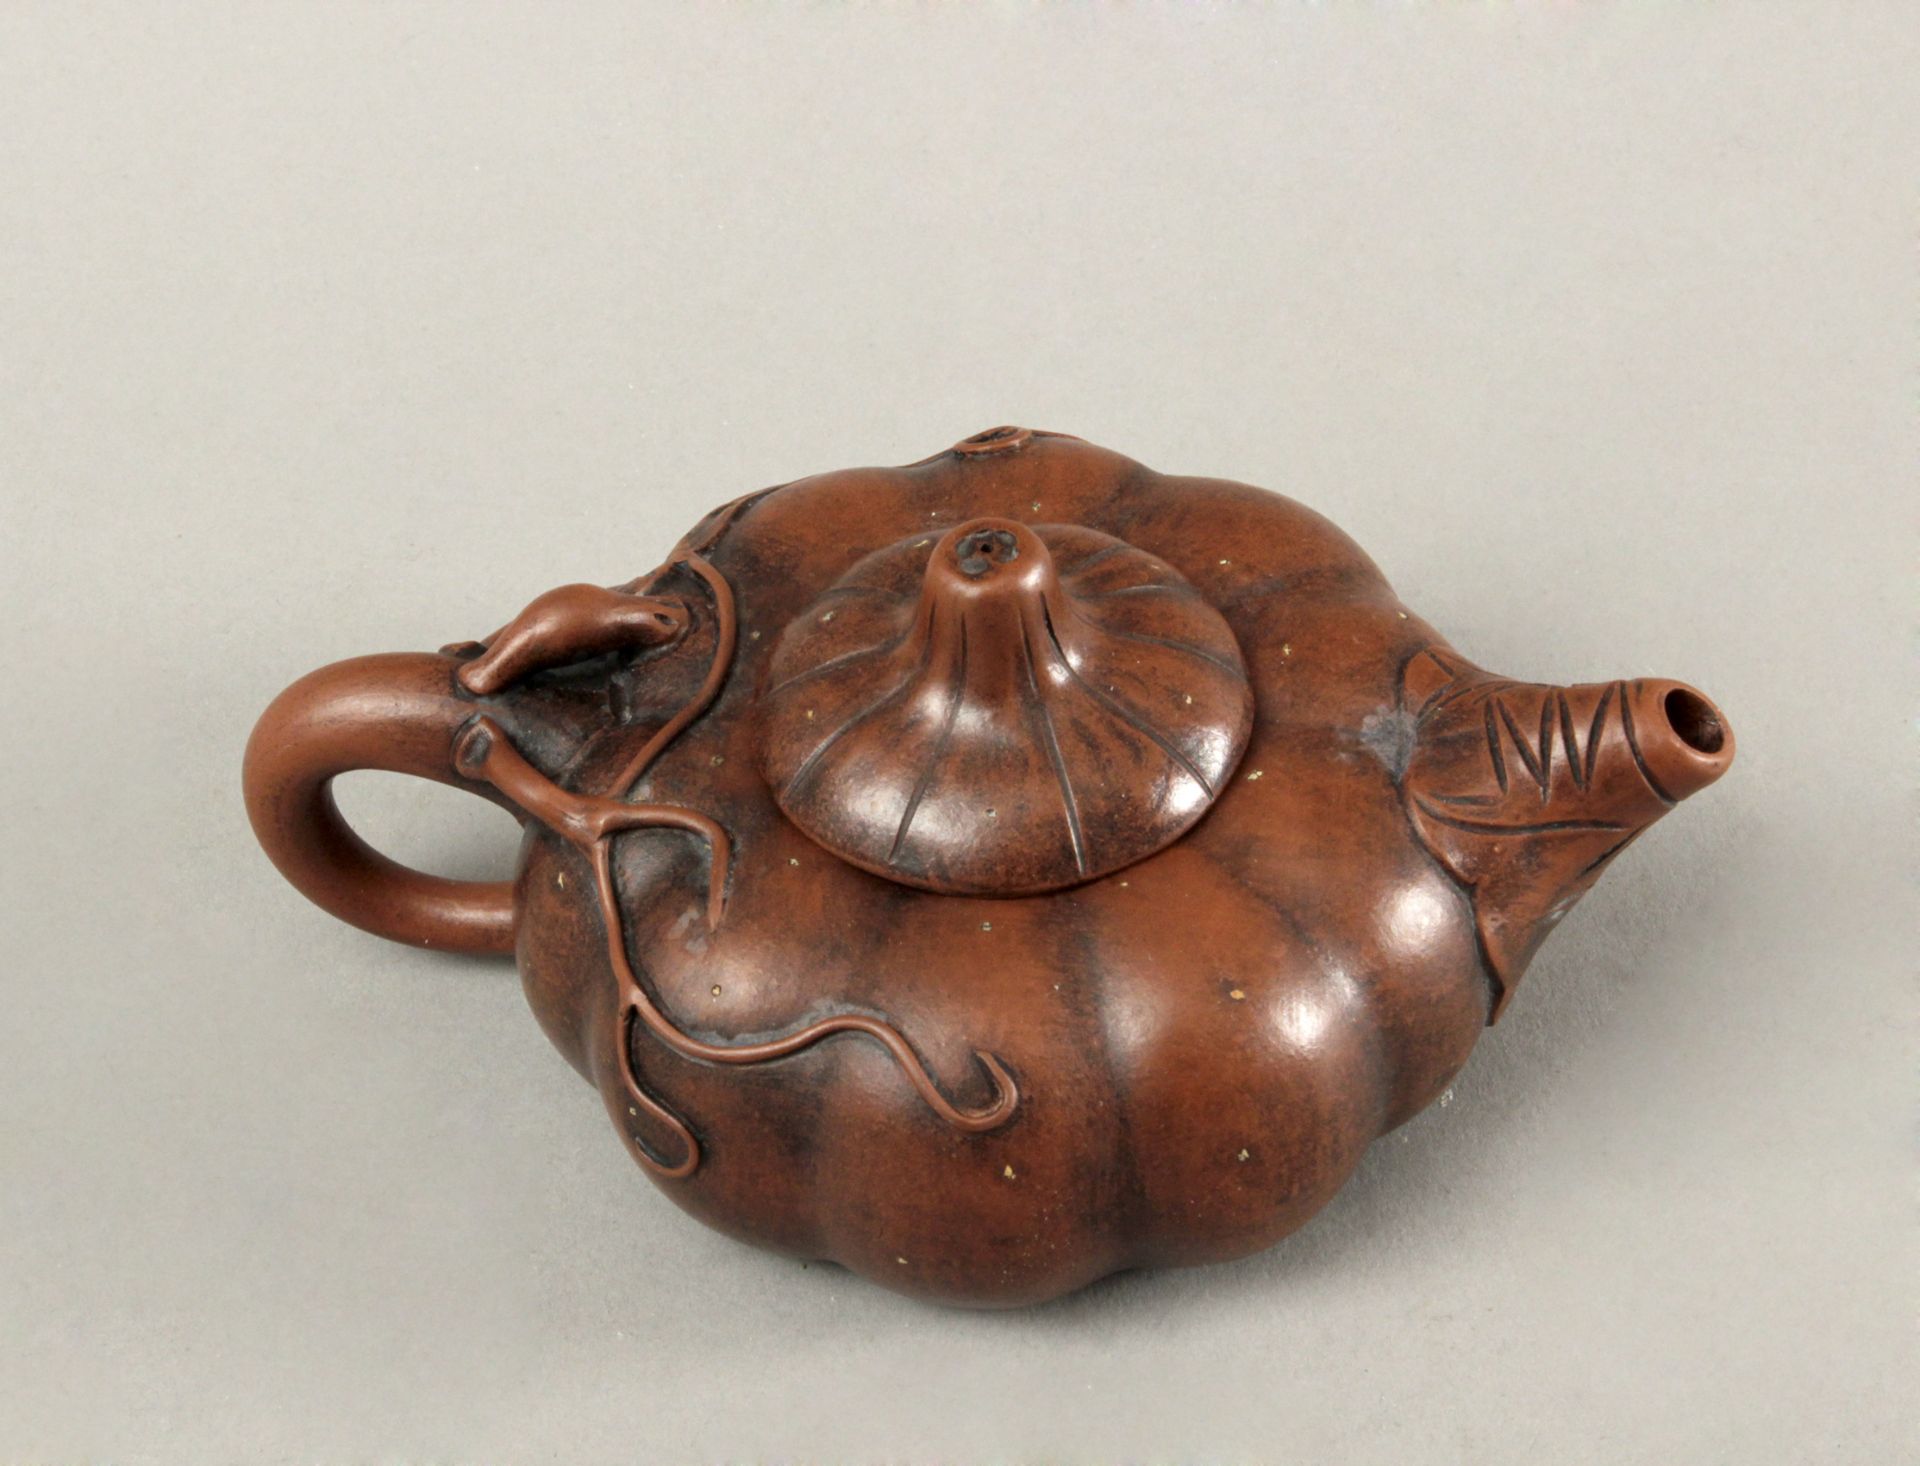 20th century Chinese Republic period yixing teapot